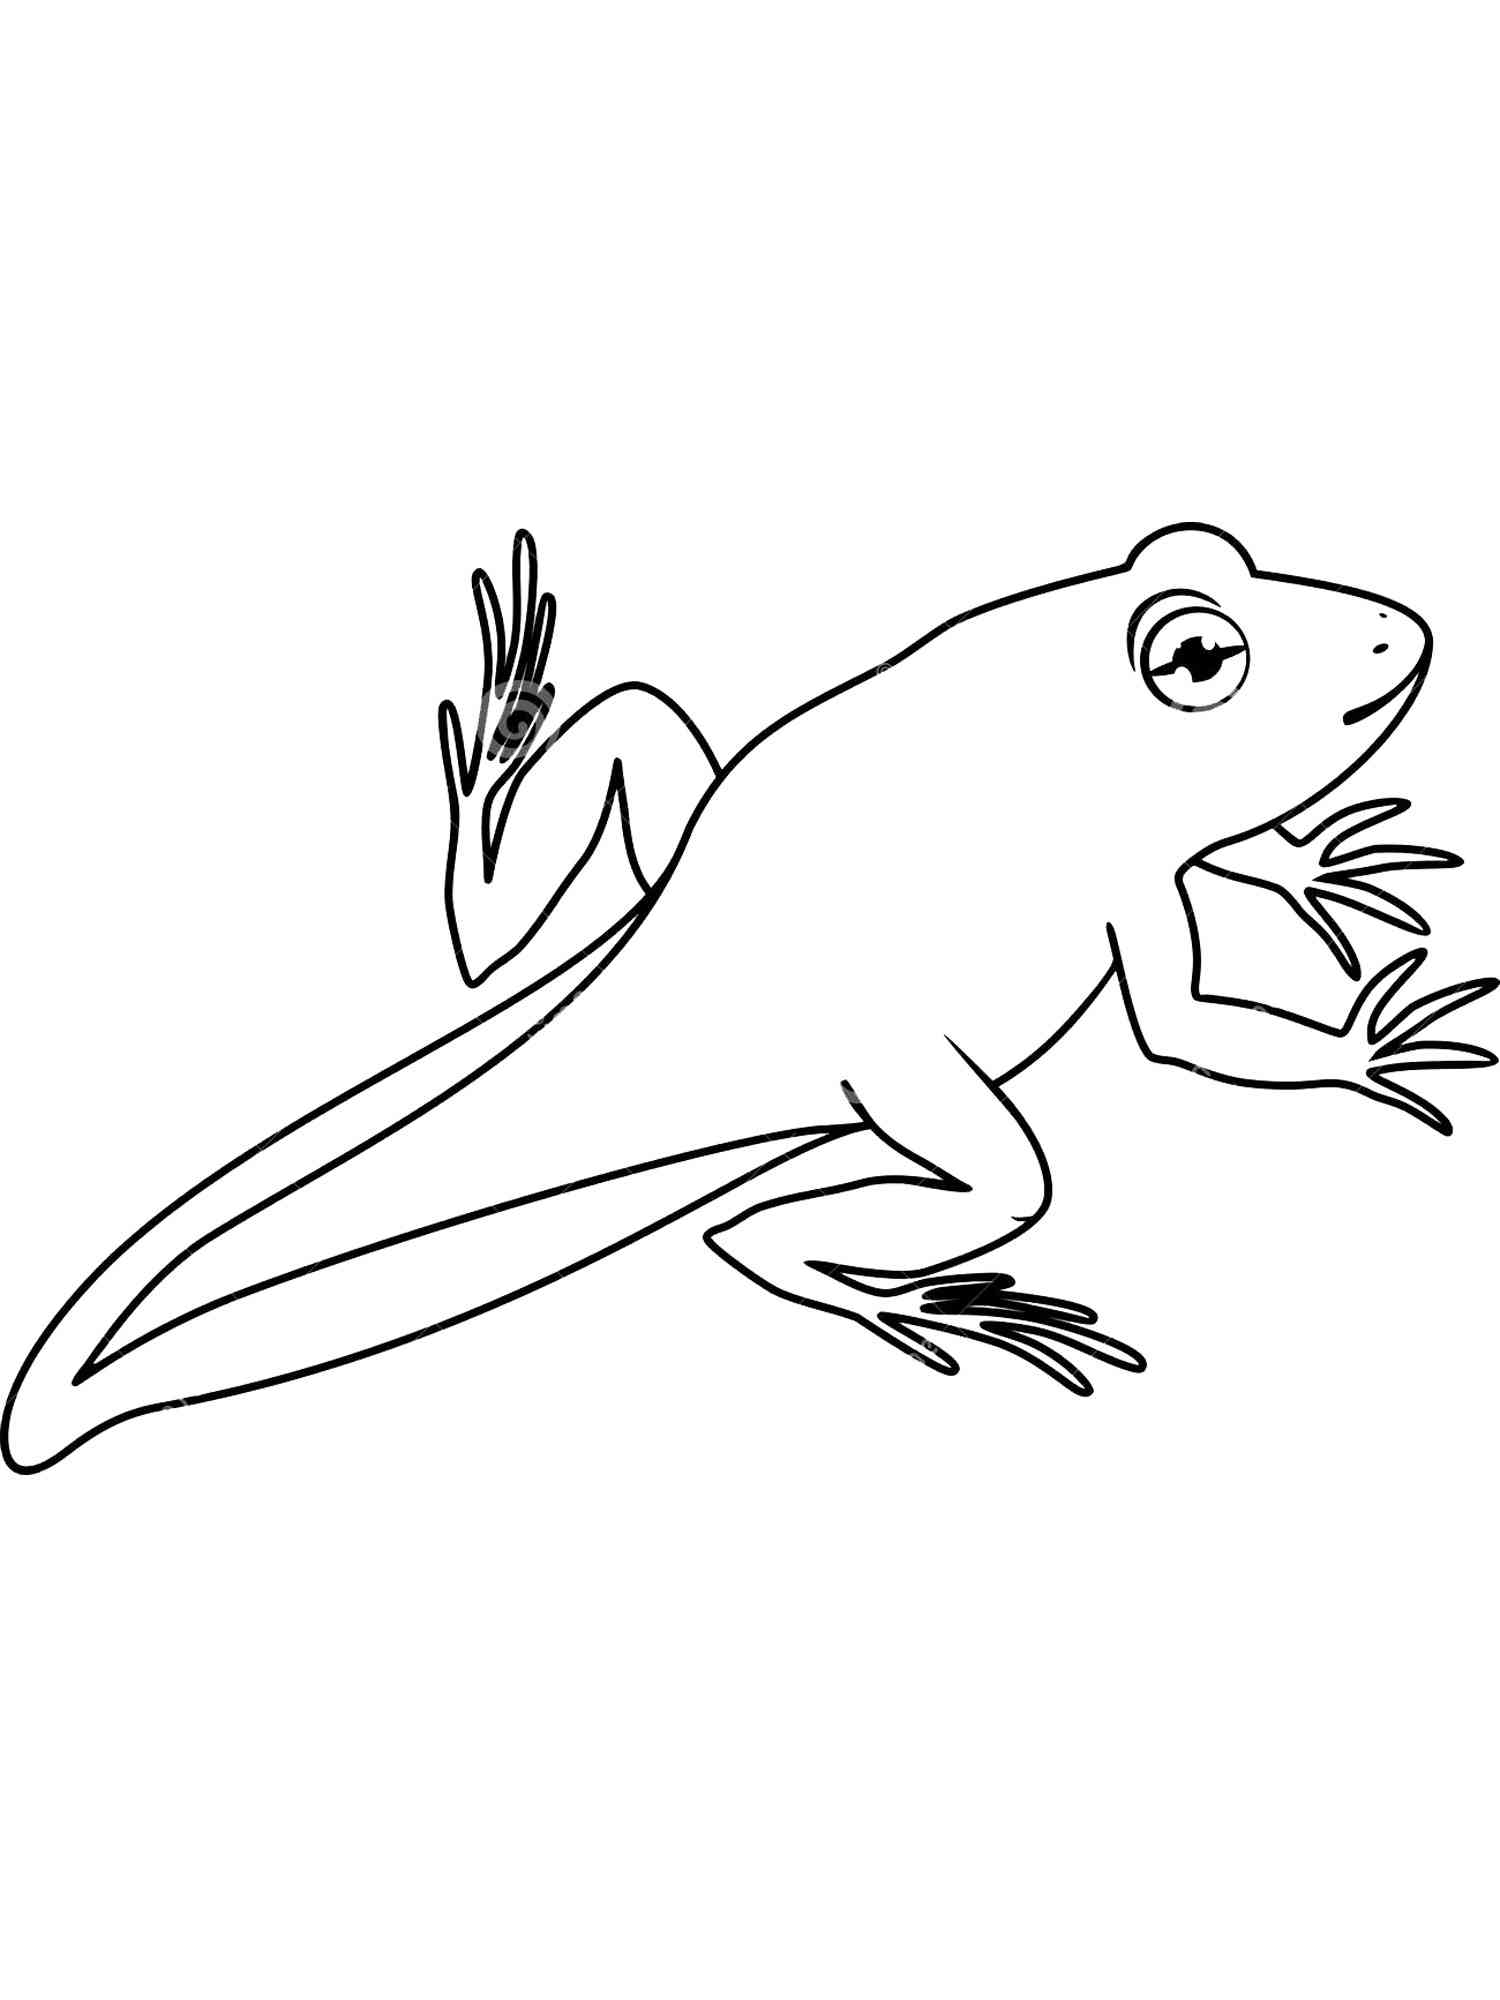 Amphibian 6 coloring page